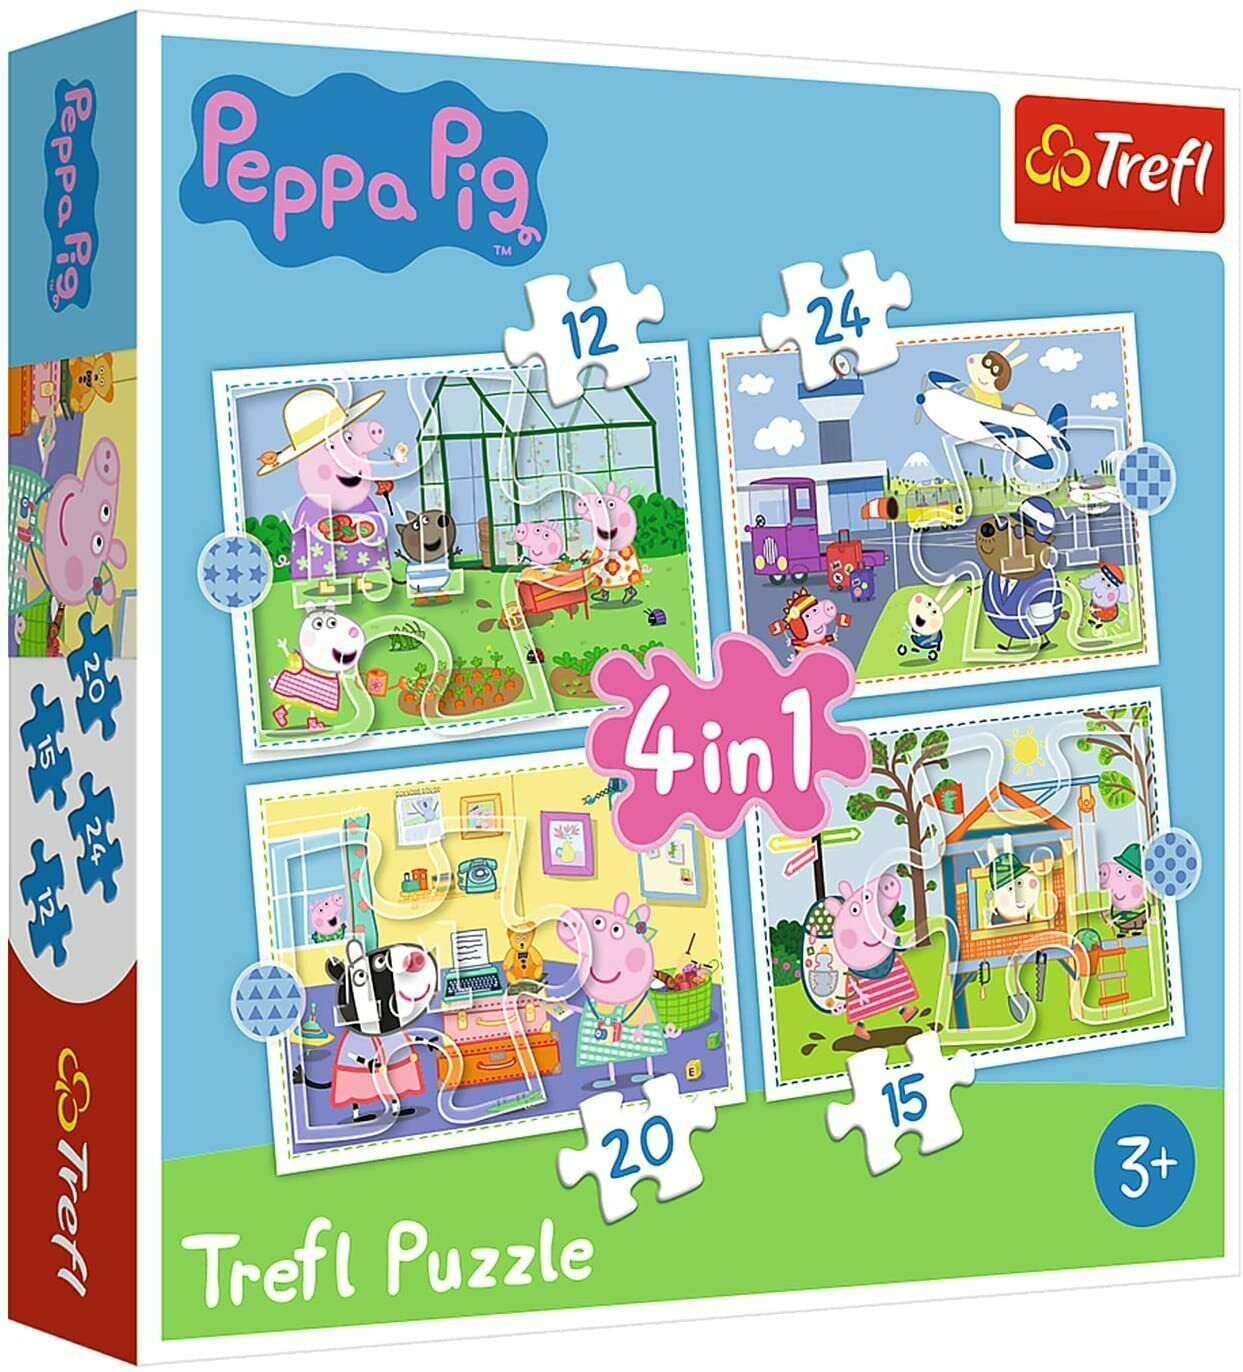 TREFL Peppa Pig 4 1 in Puzzle